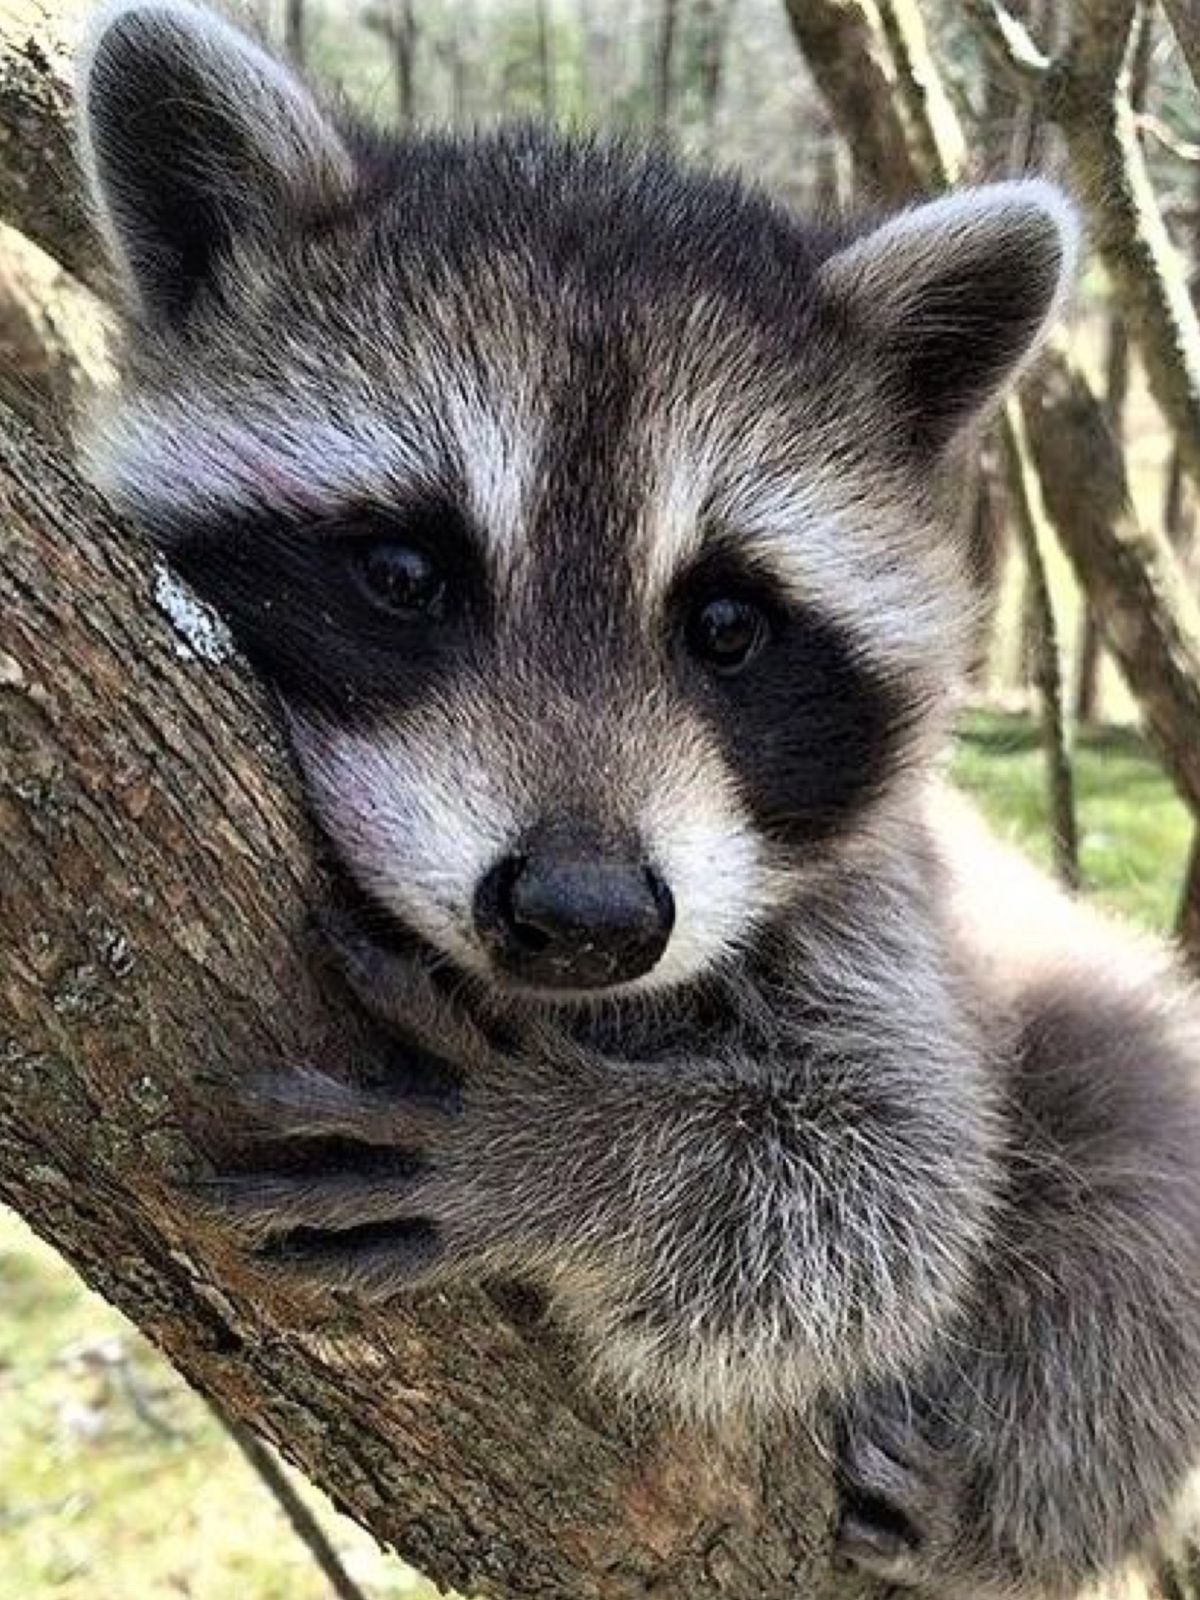 Pin by Patti Calhoun on Raccoon World | Pinterest | Raccoons, Animal ...